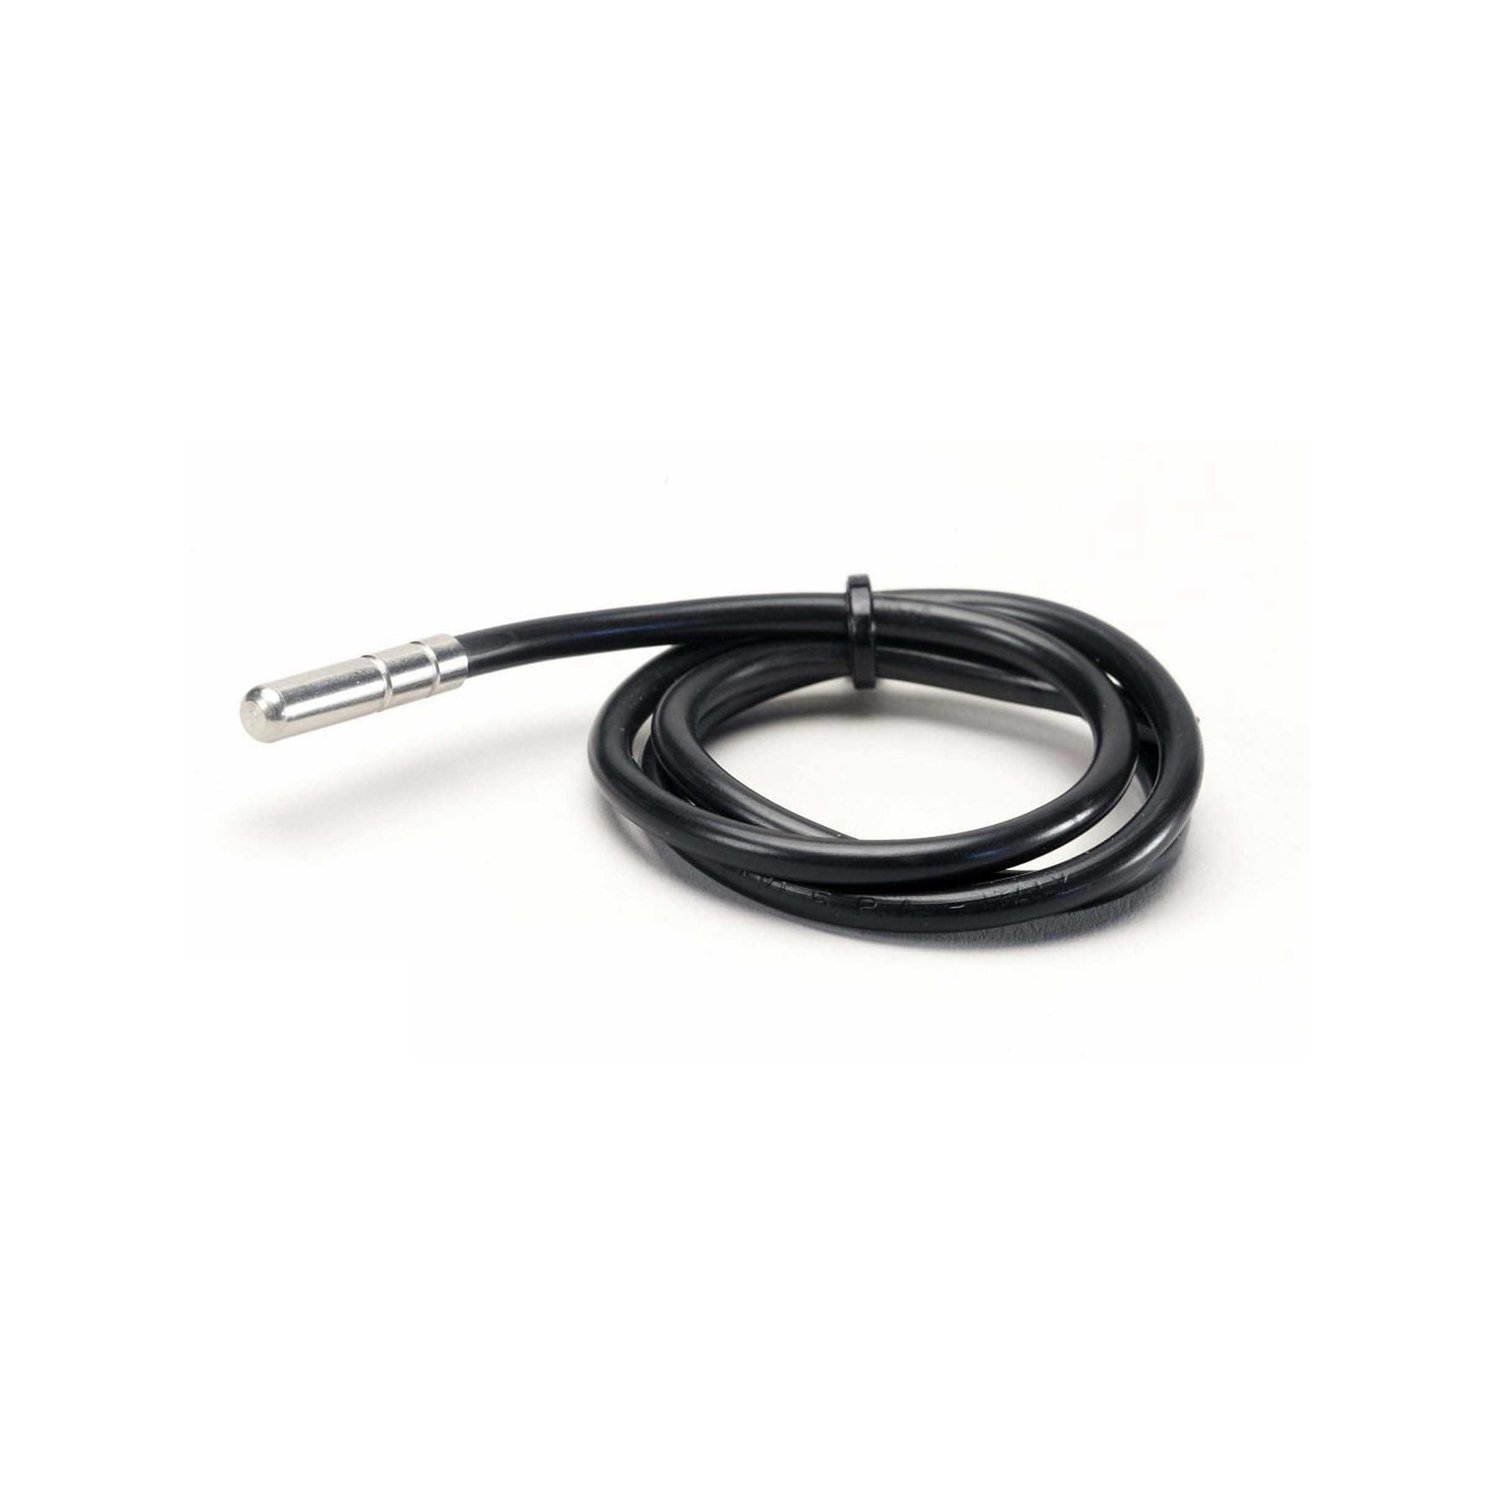 Sensor NTC, L = 2 m, metal cover 6x40 mm, PVC cable, range -30 - + 80 ° C, IP67